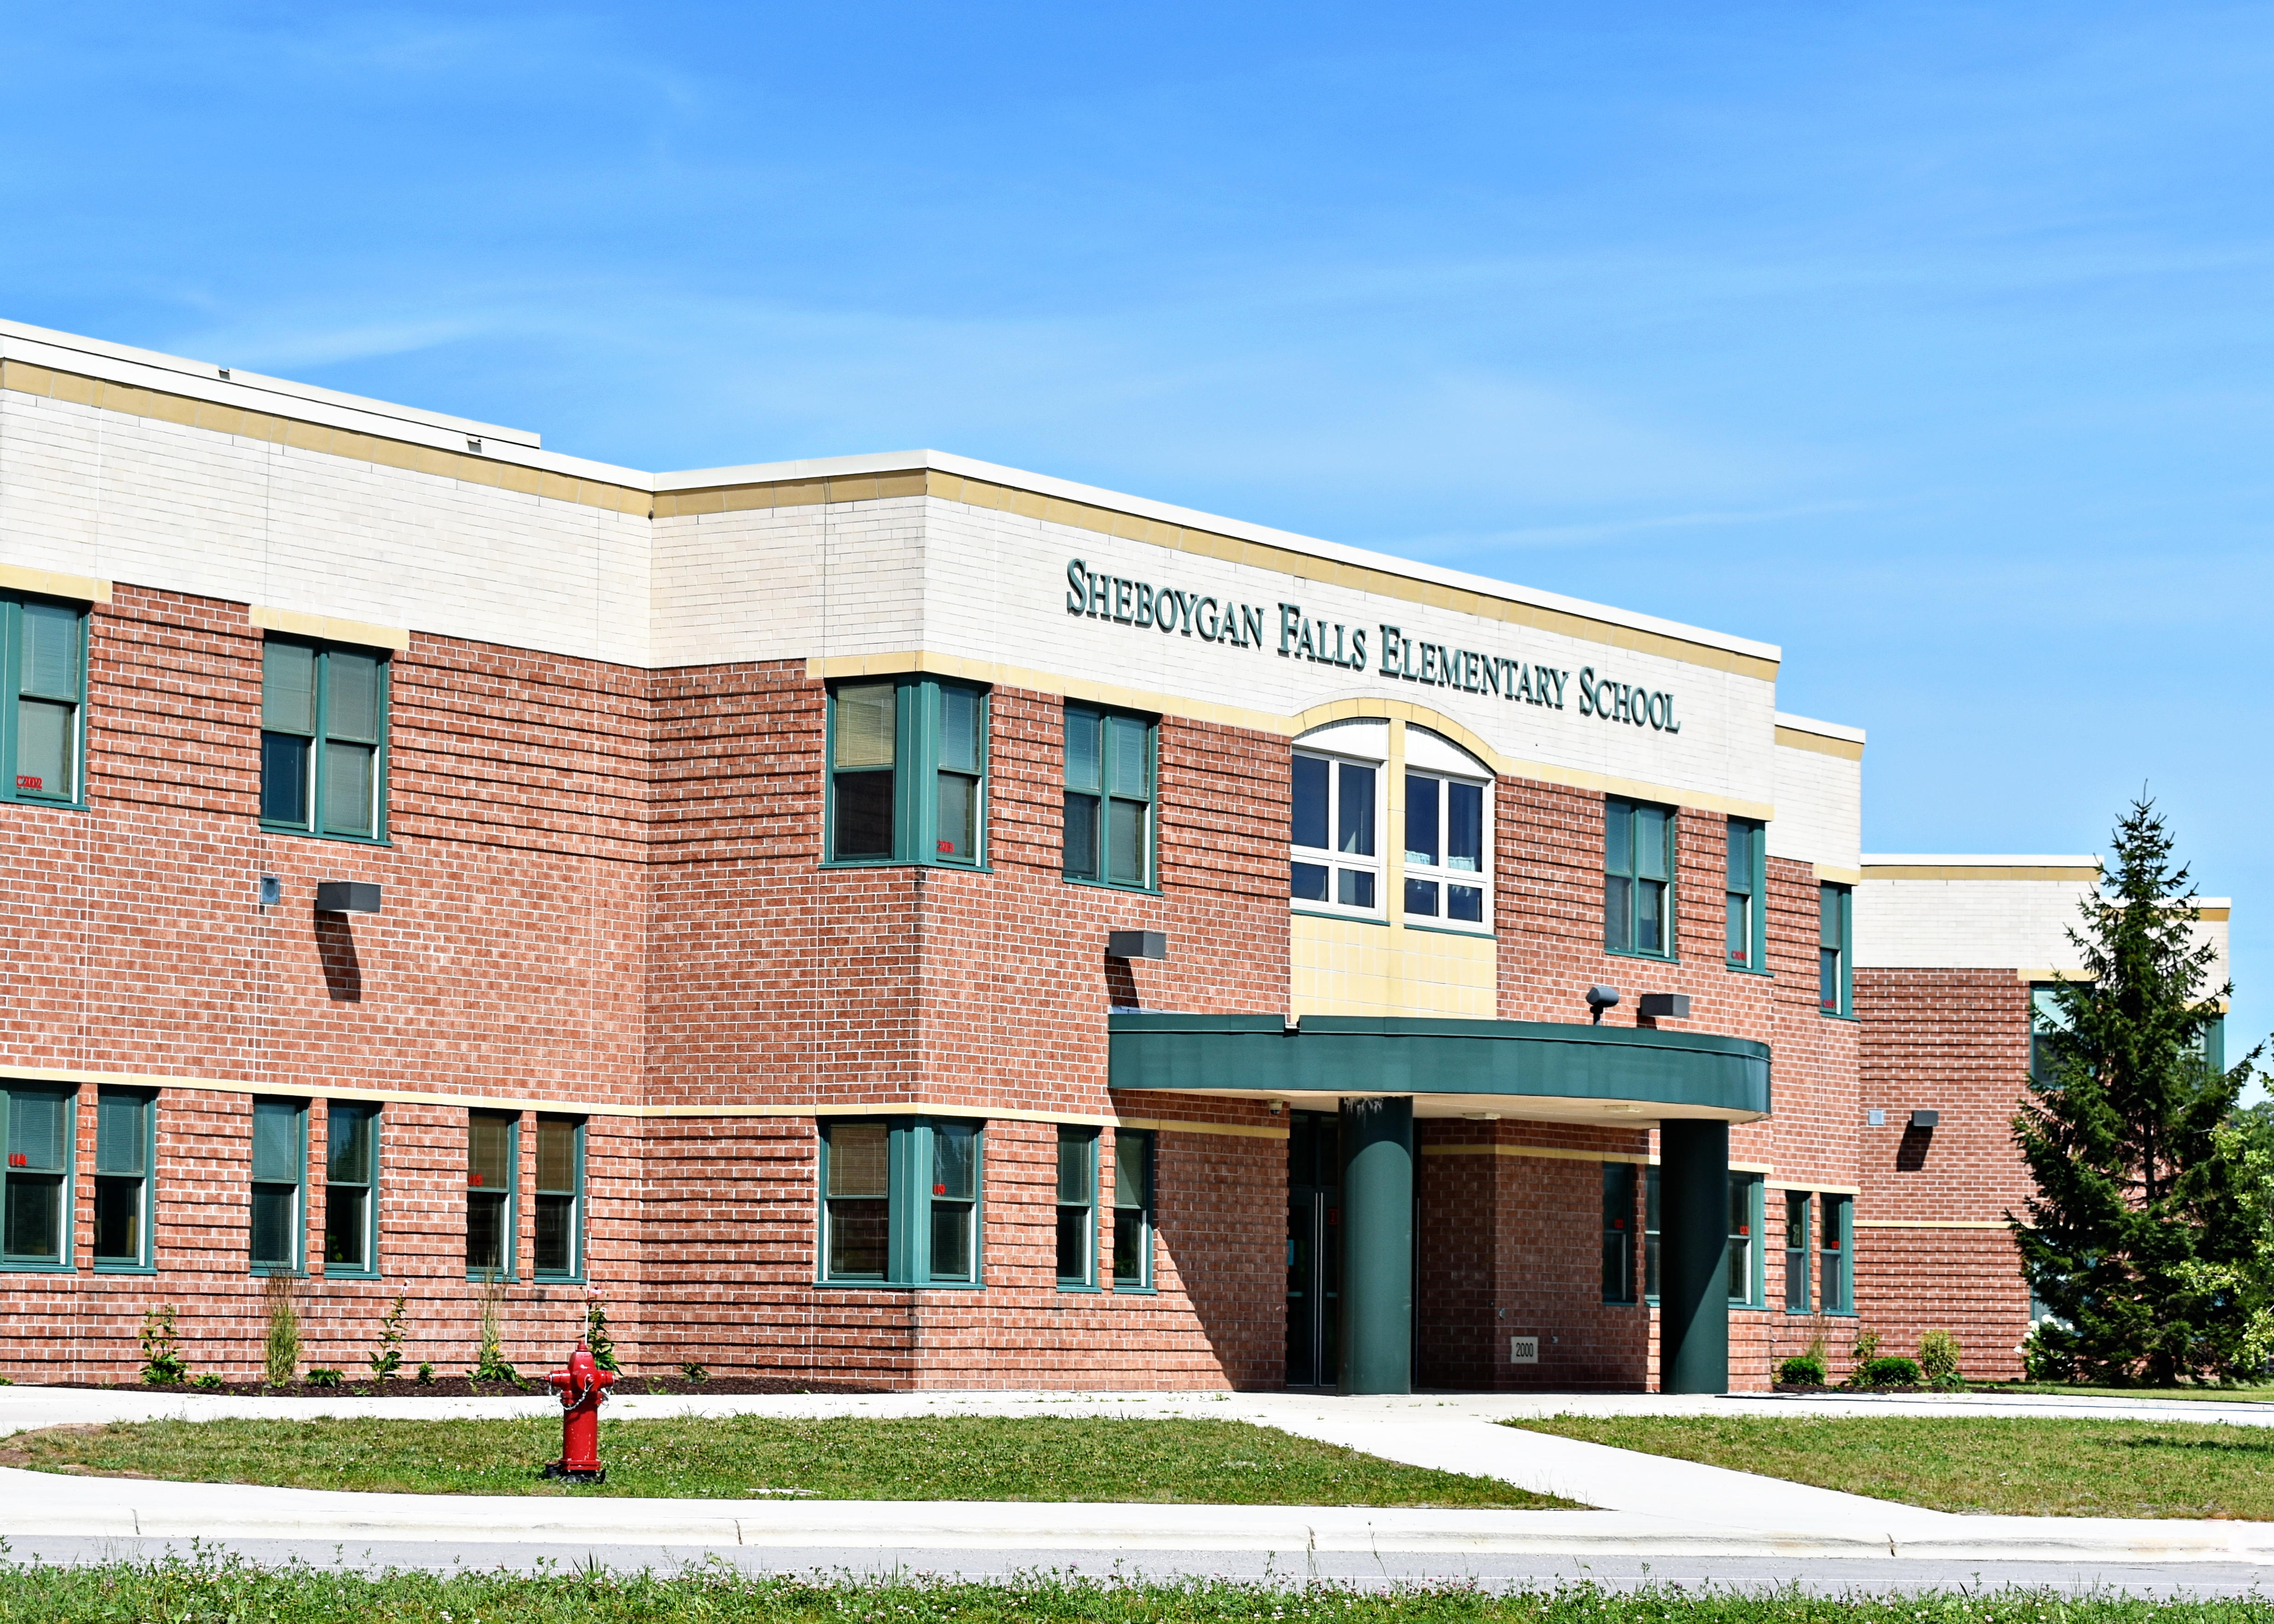 Sheboygan Falls Elementary School